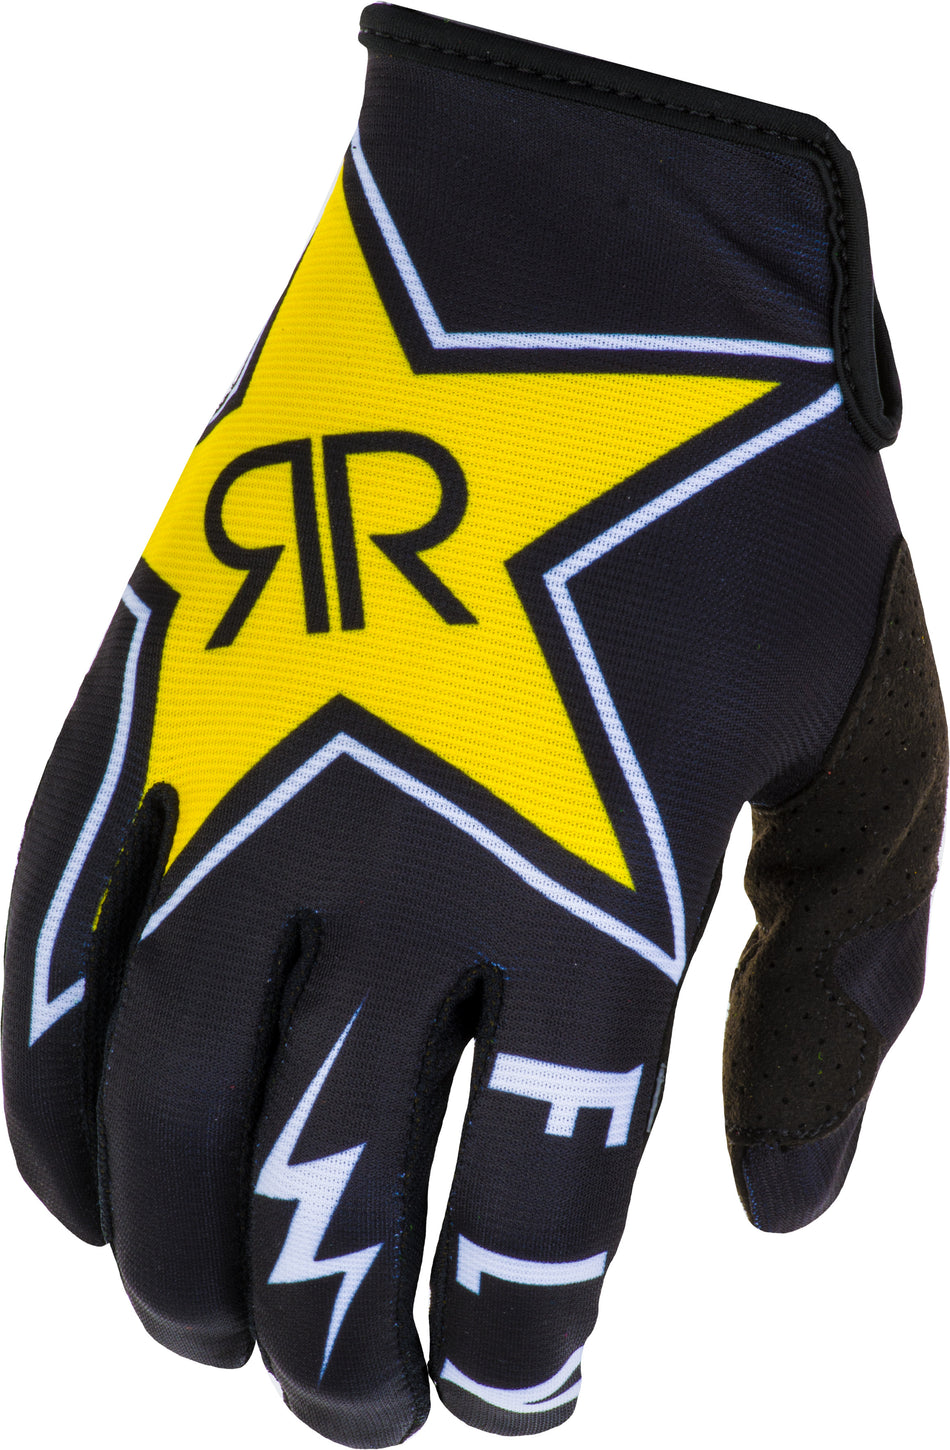 FLY RACING Lite Rockstar Gloves Black/White Sz 12 373-01312